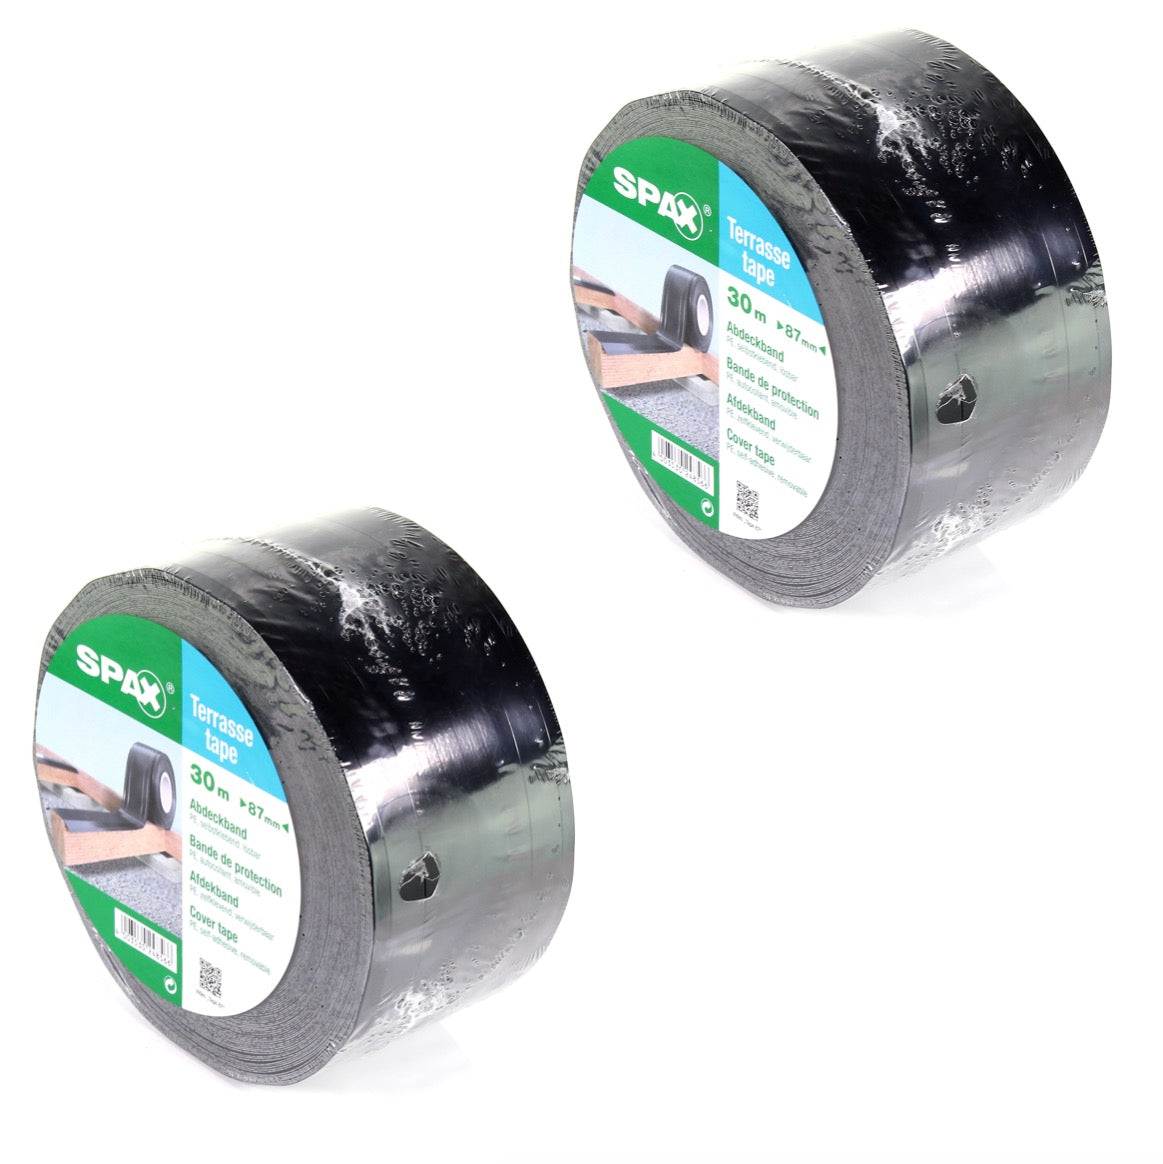 SPAX Tape 30m x 87mm 2x Klebeband UV-resistent ( 2x 5000009186419